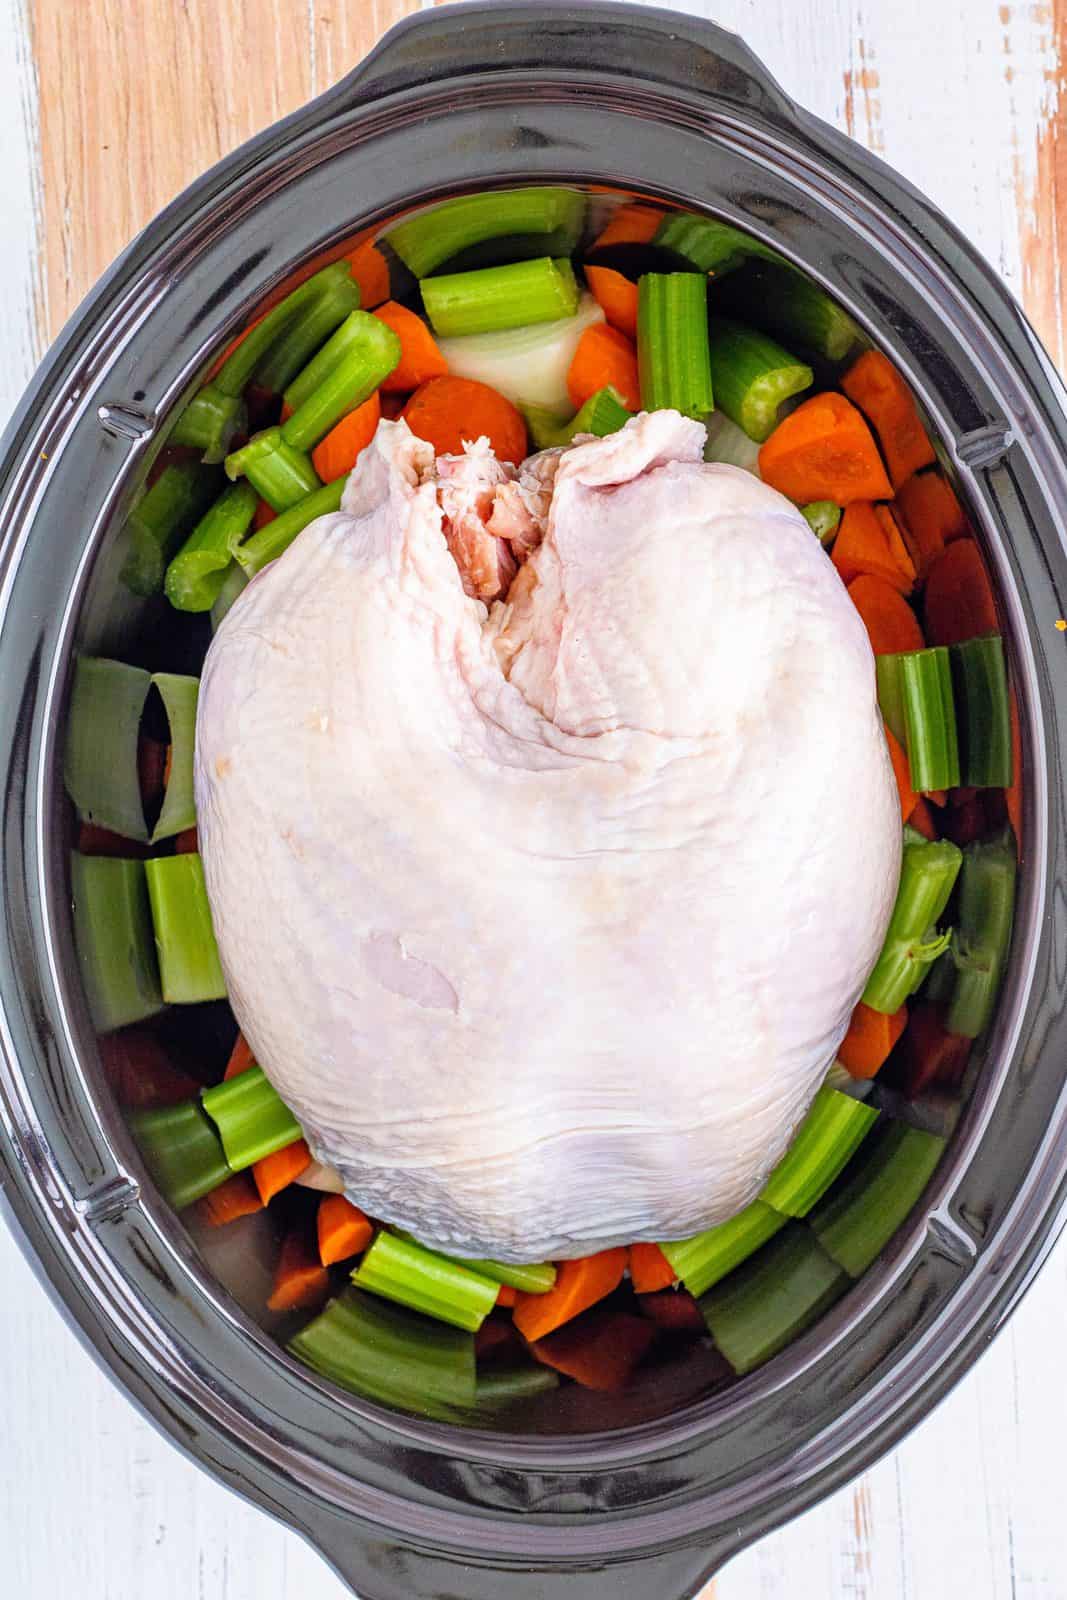 Turkey Breast added to crock pot over vegetables.